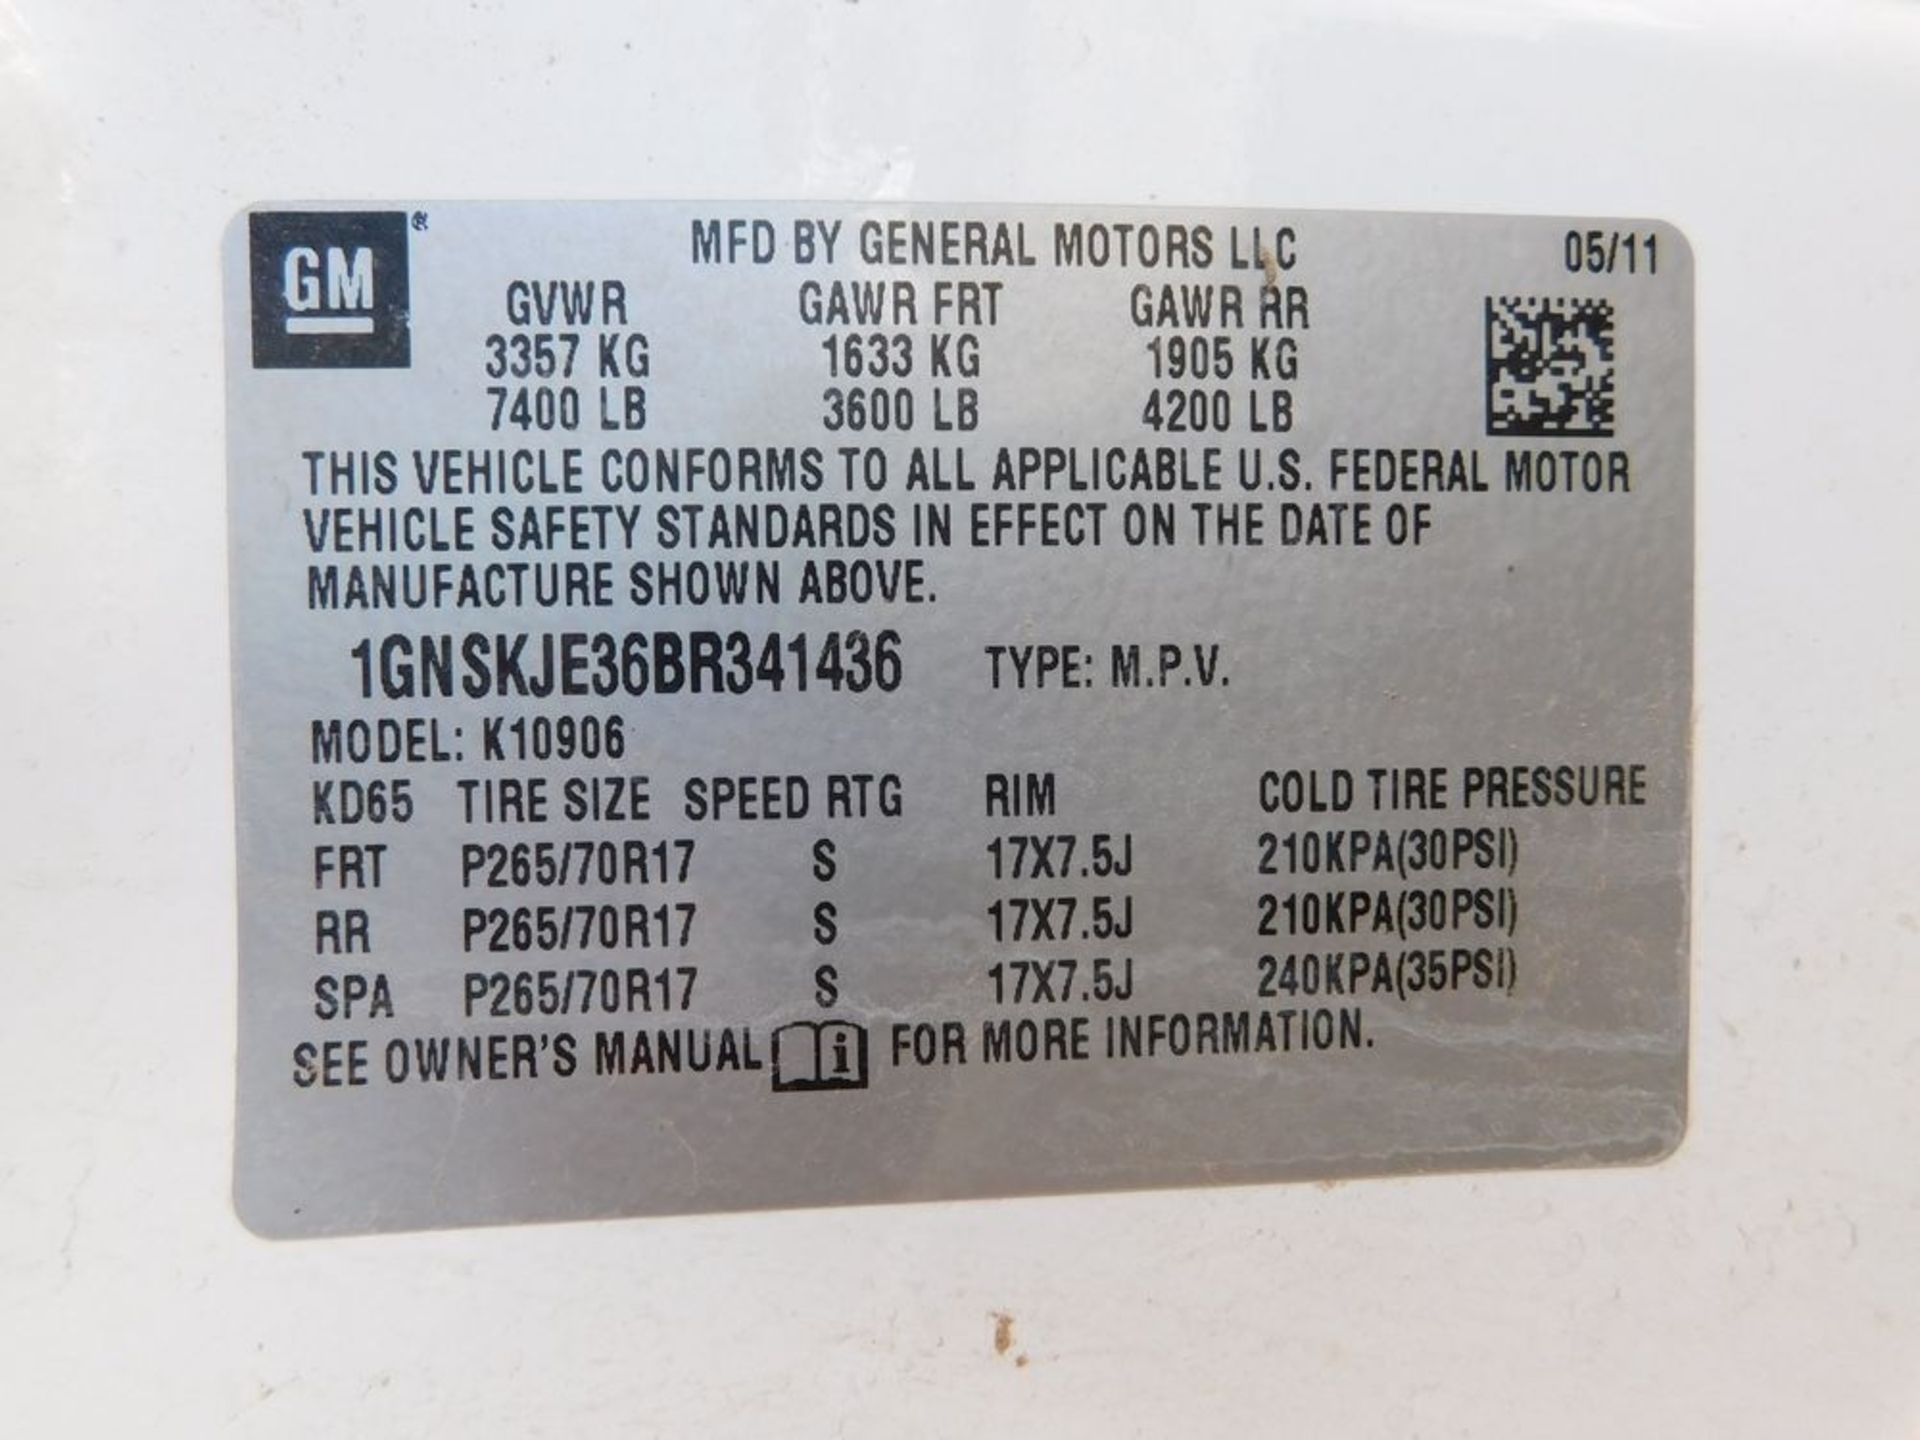 (2011) Chevy Suburban LT, 4-Door SUV, 5.3L Miles: n/a; Lic: 789RRZ; Vin: 1GNSKJ36BR341436, CT-72 - Image 4 of 4